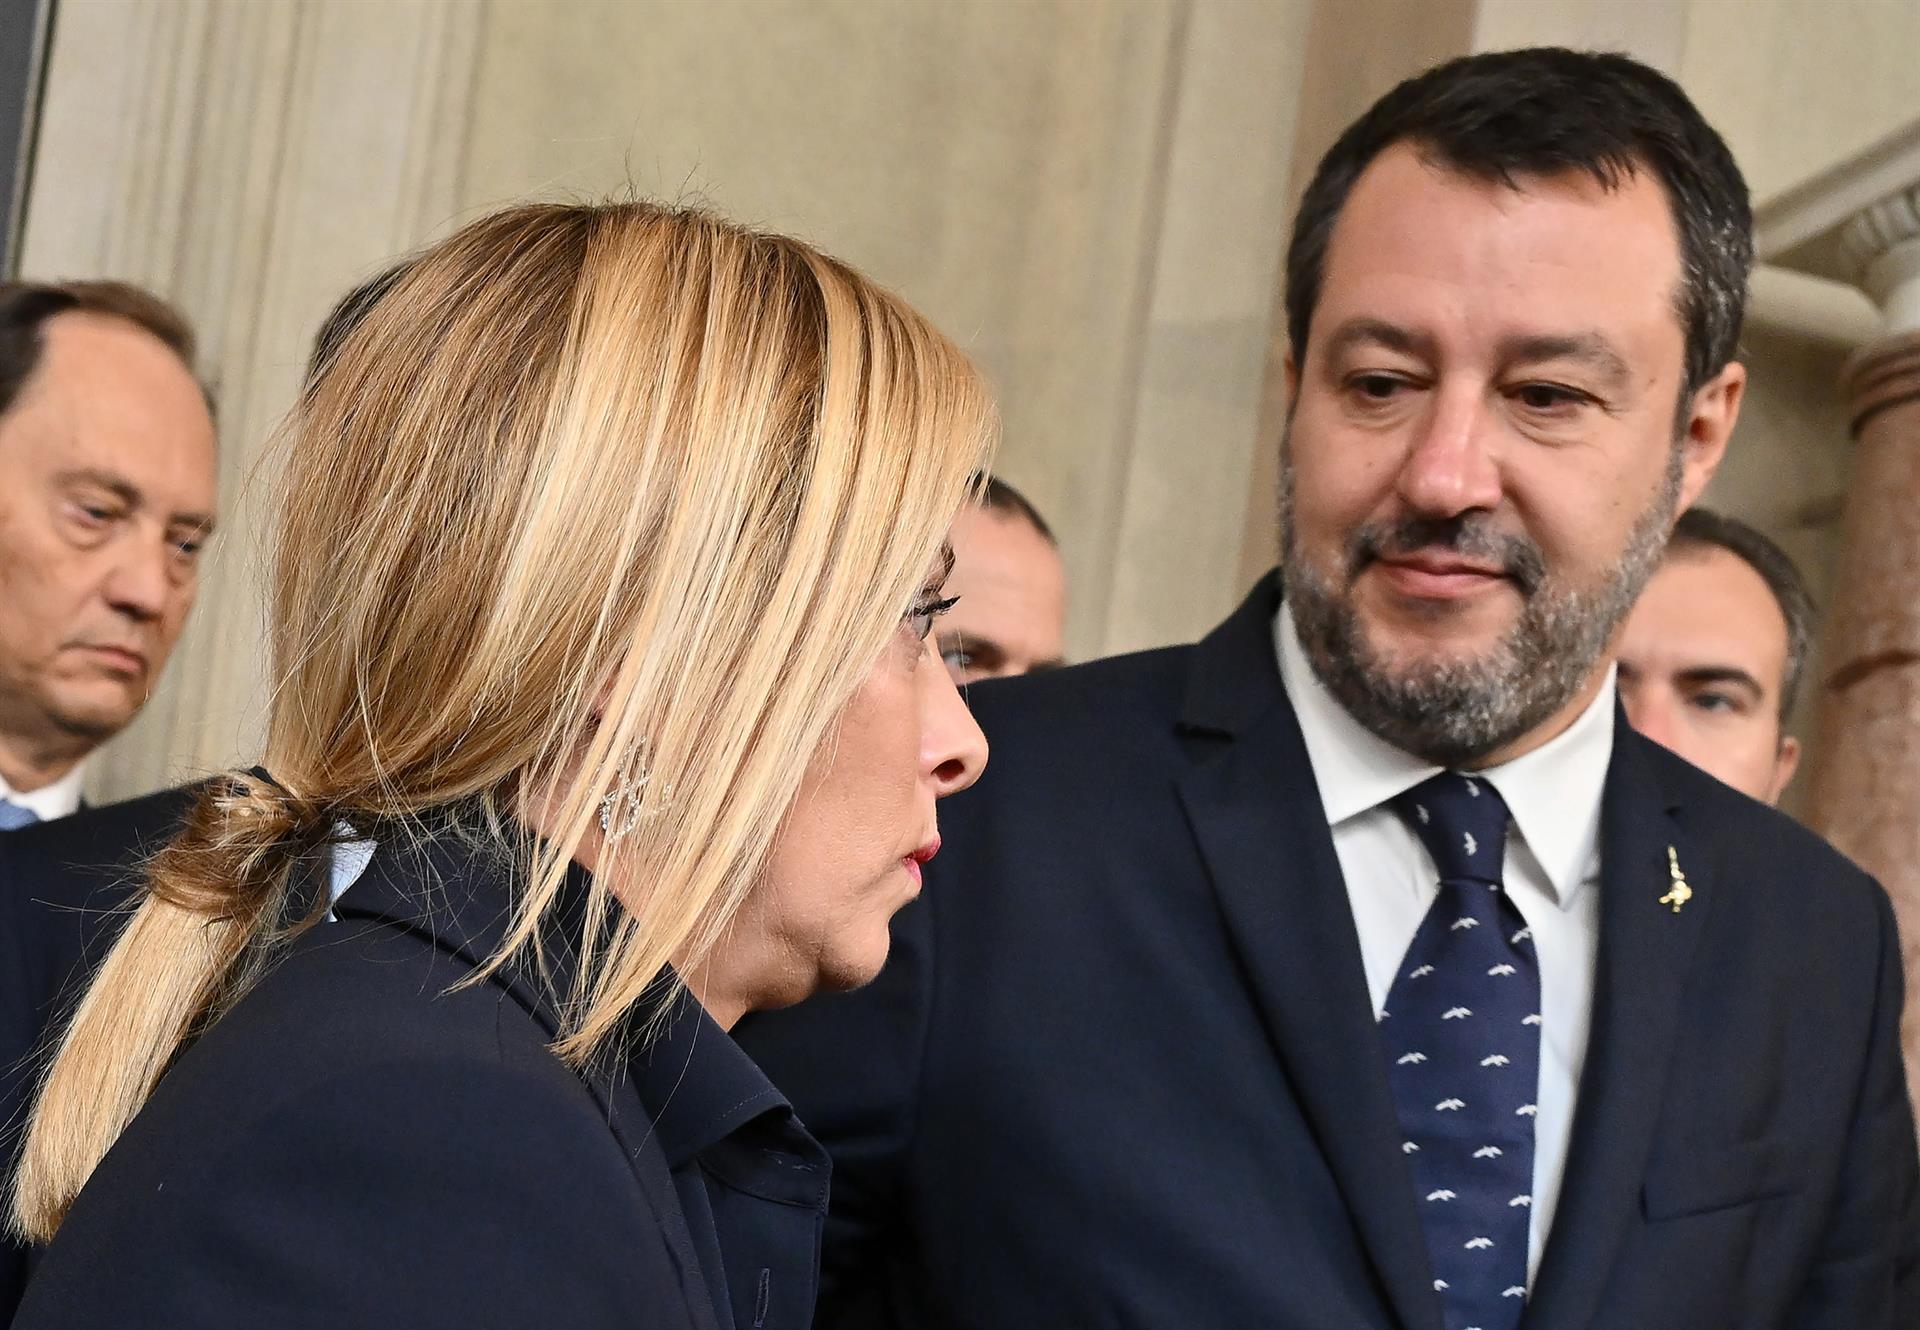 Georgia Meloni forma nou govern a Itàlia, amb Matteo Salvini de vice primer ministre